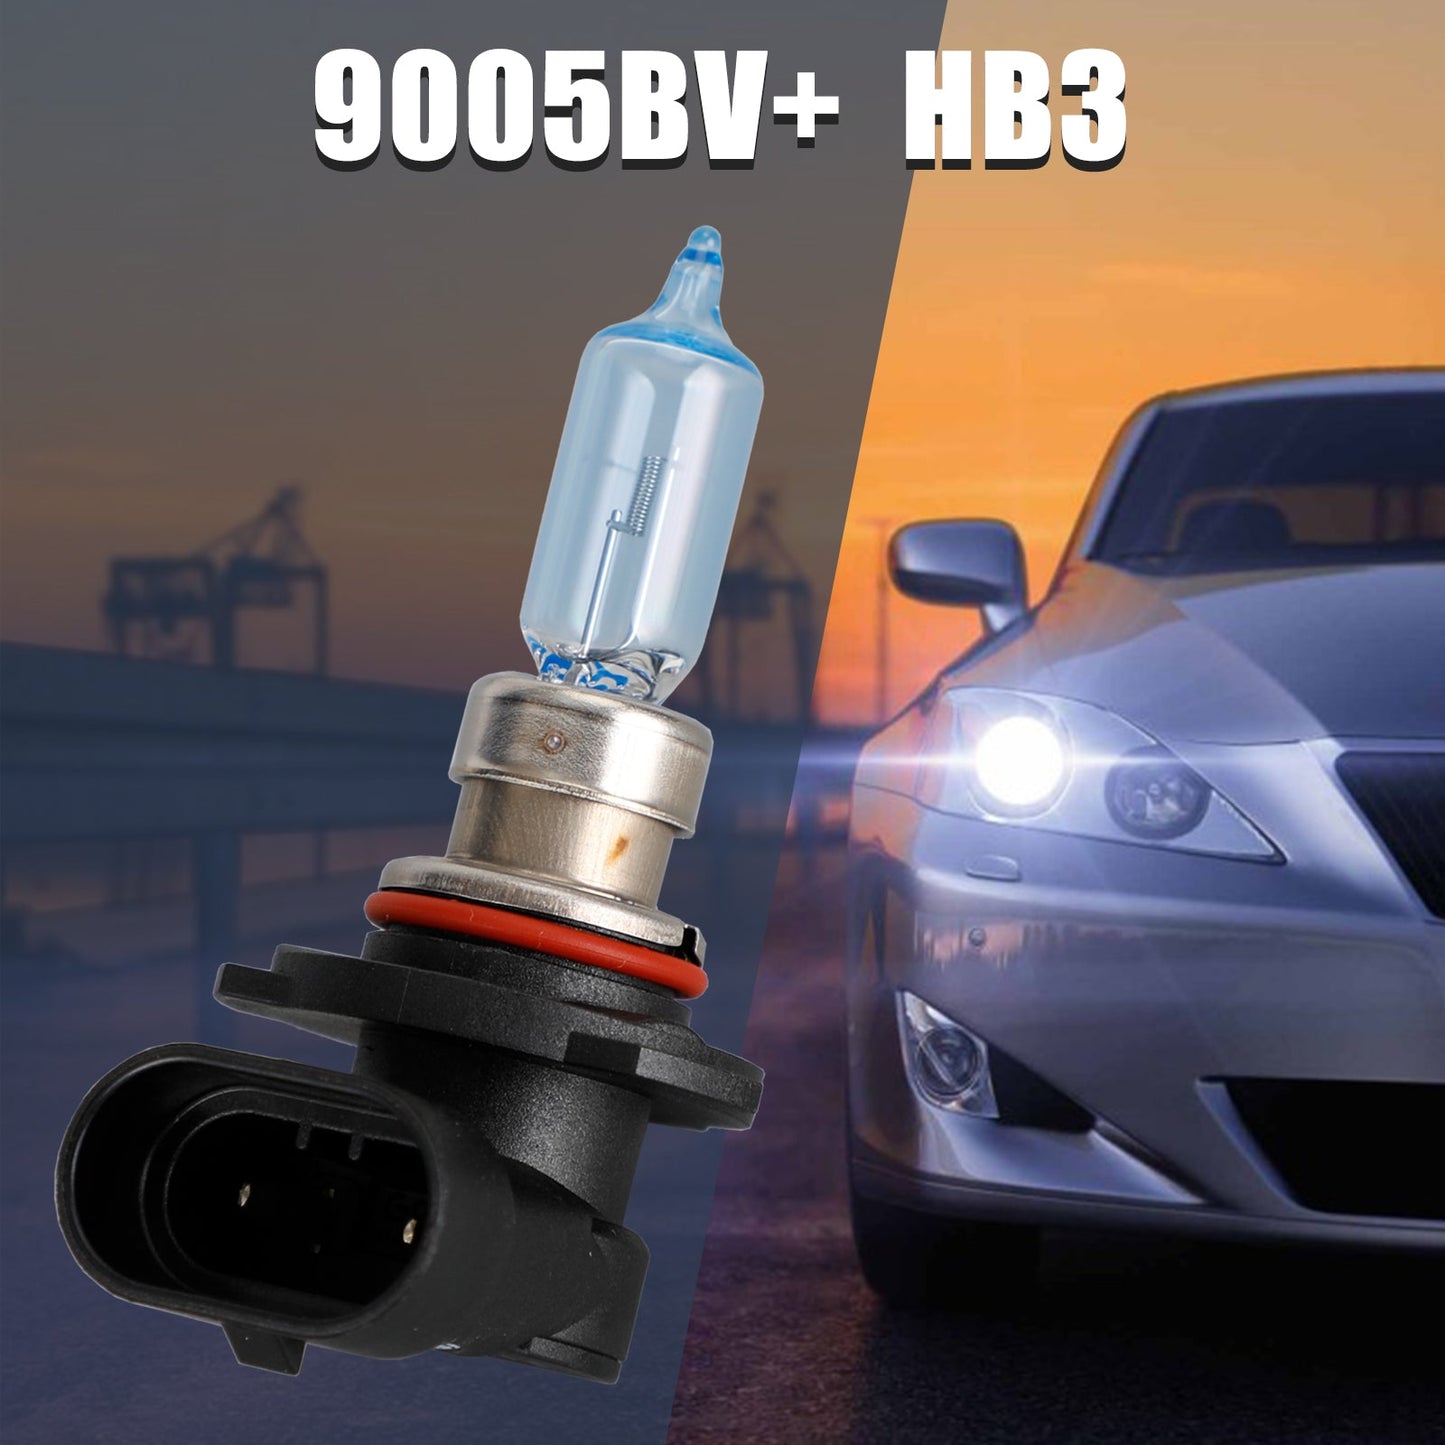 For Philips 9005BV+ BlueVision 4000K Car Headlight Bulbs HB3 12V60W P20D